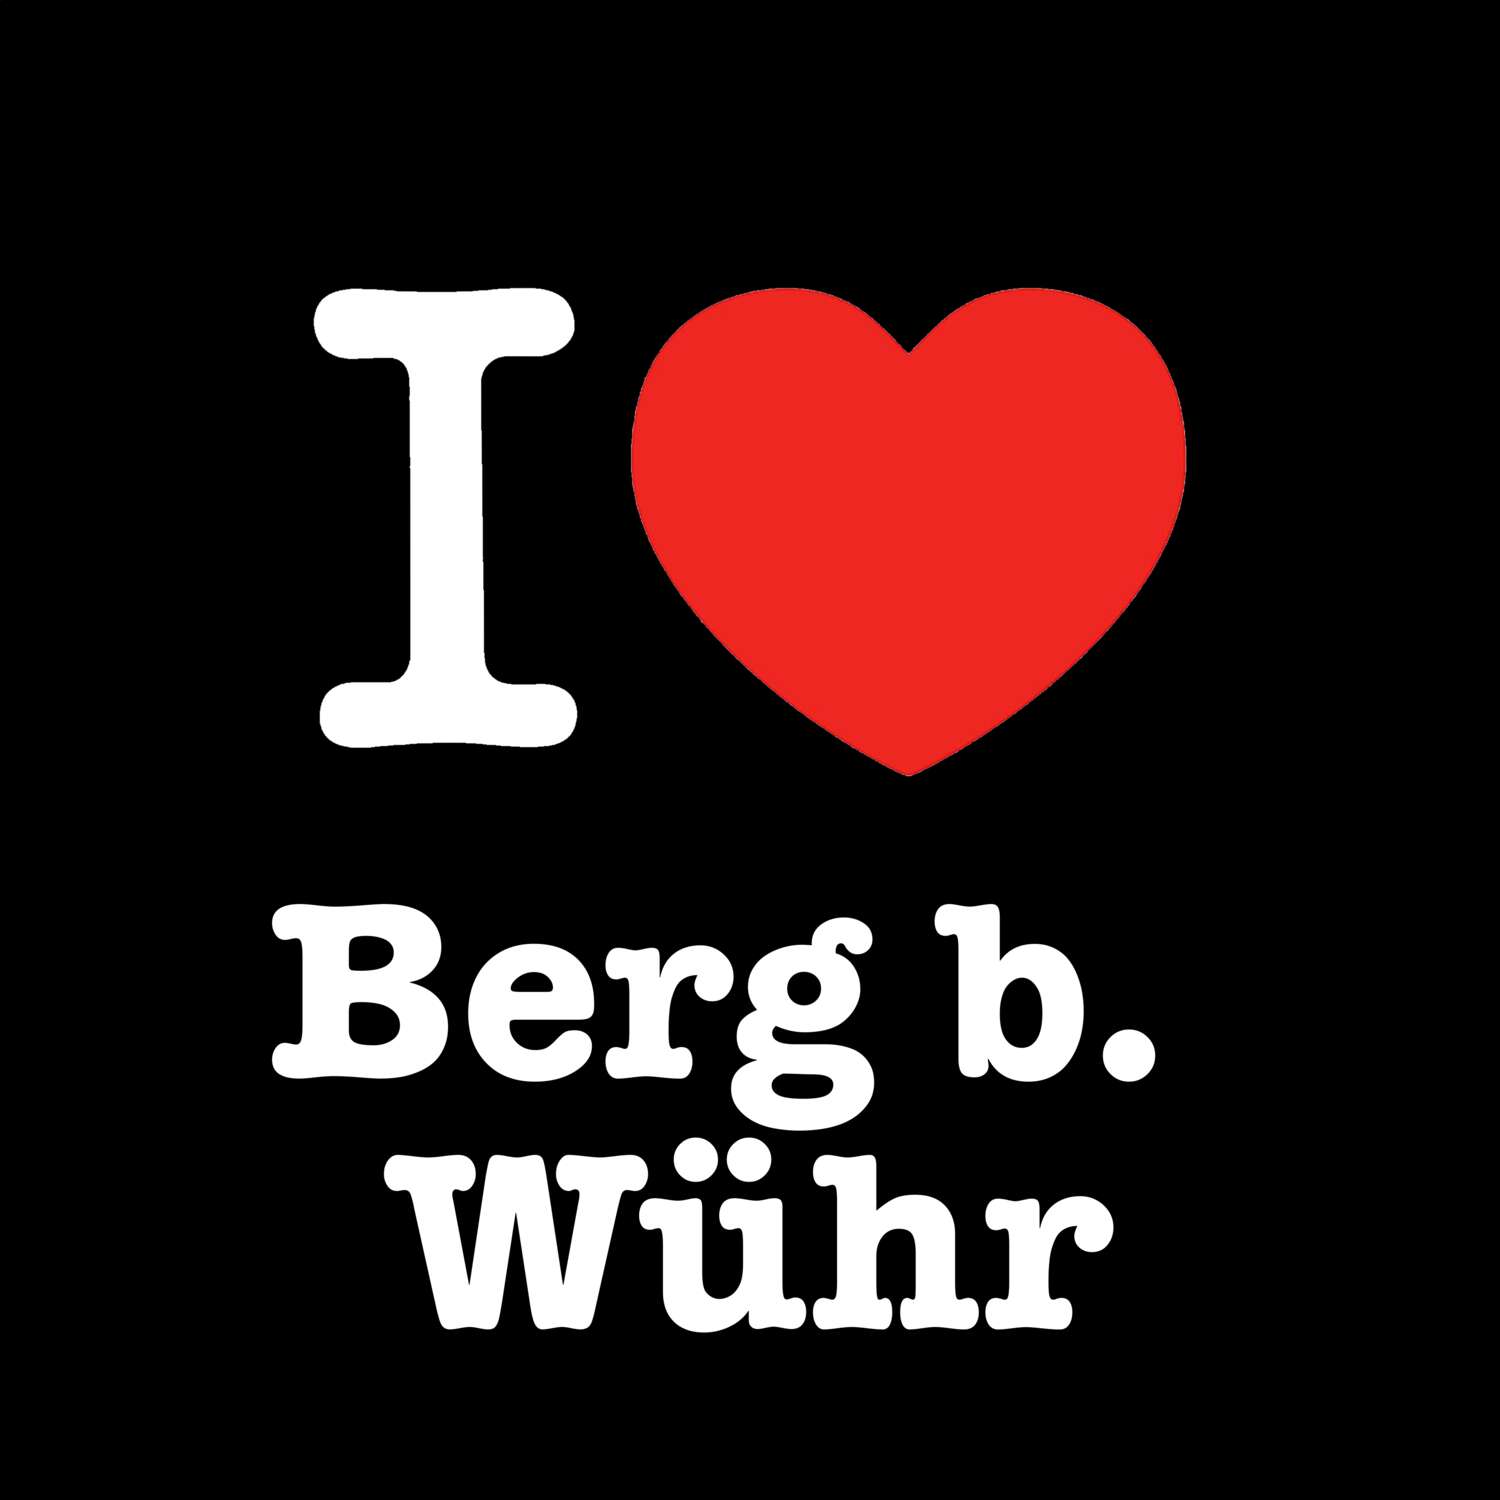 Berg b. Wühr T-Shirt »I love«